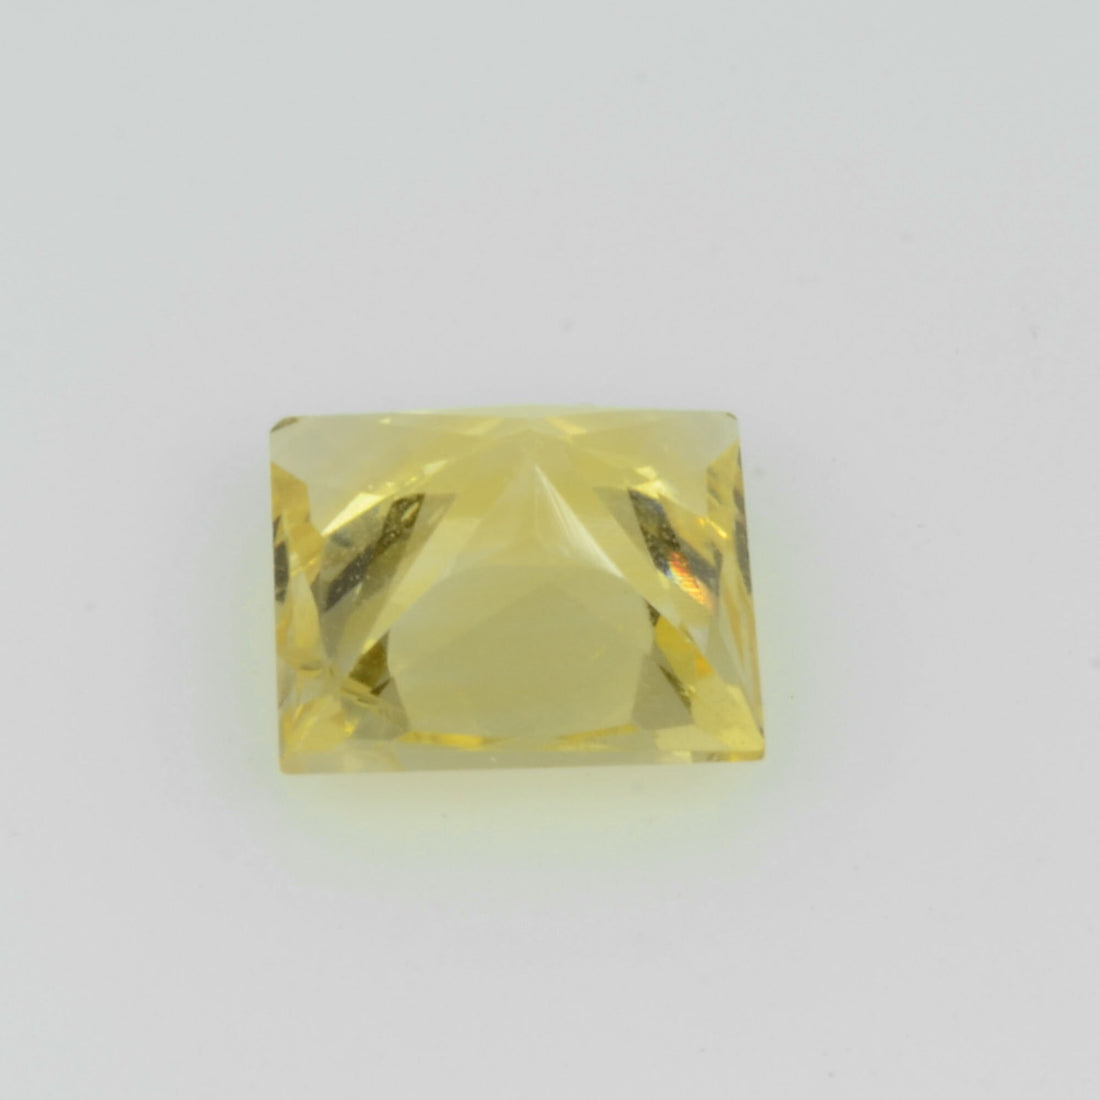 1.01 Cts Natural Yellow Sapphire Loose Gemstone Princess Cut